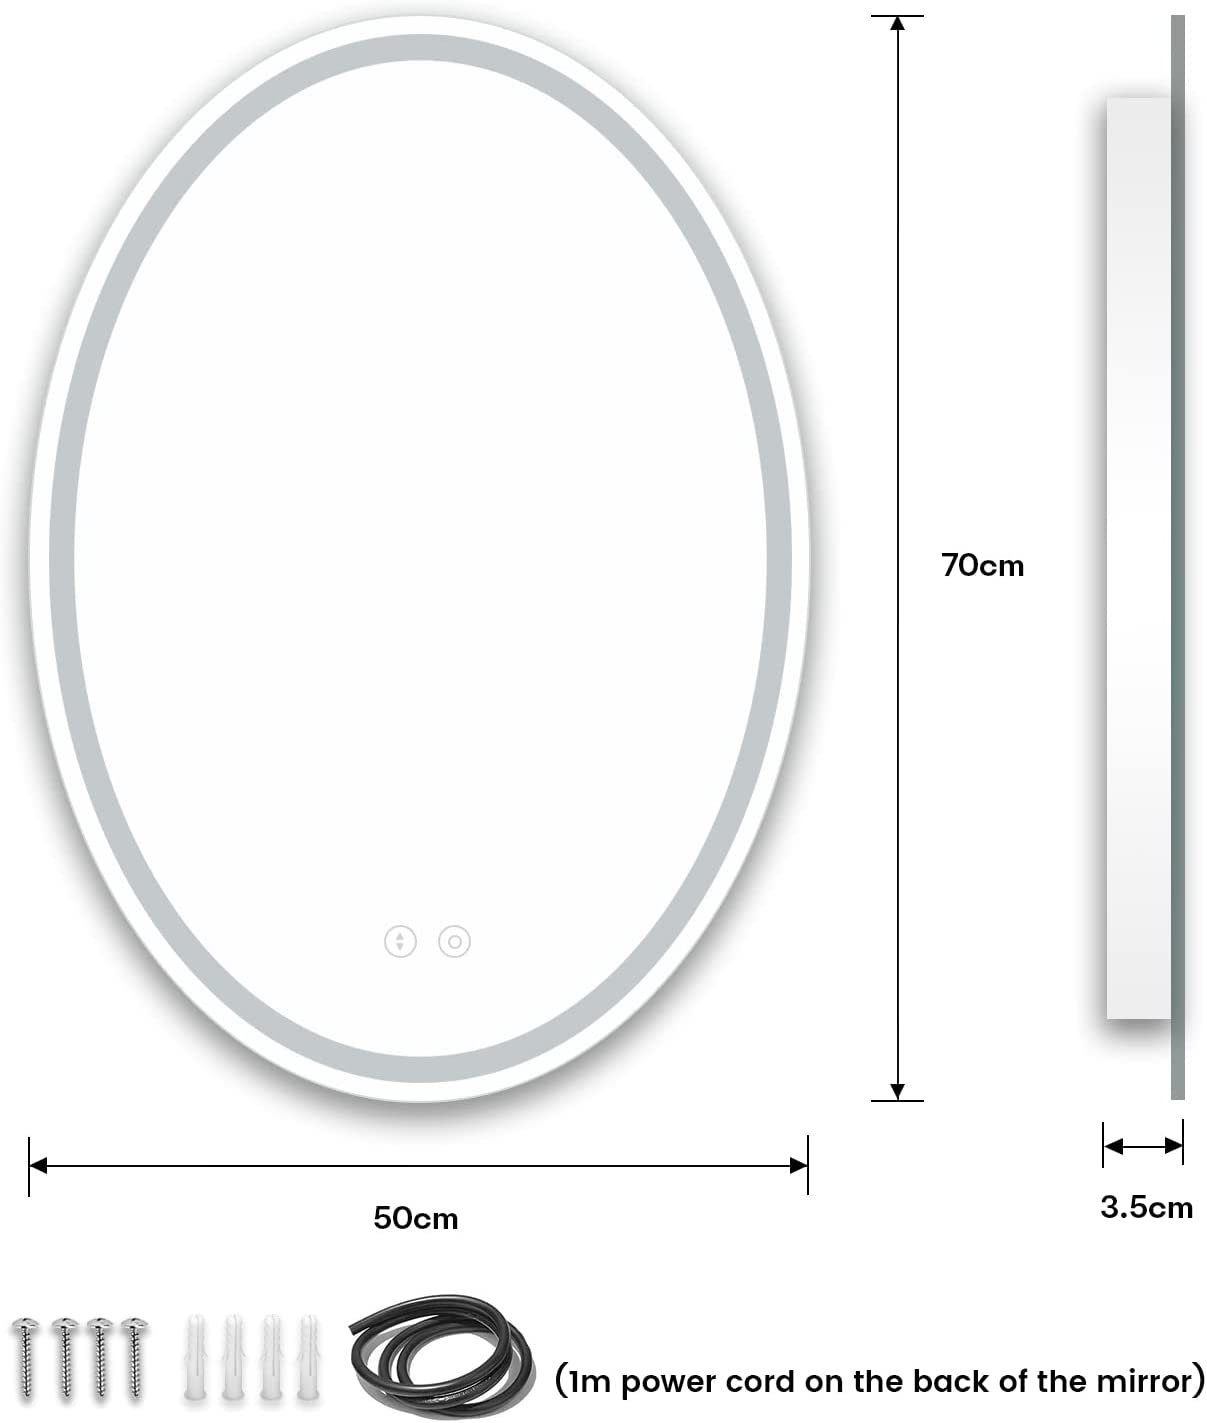 Oval LED Badspiegel Dripex Spiegel